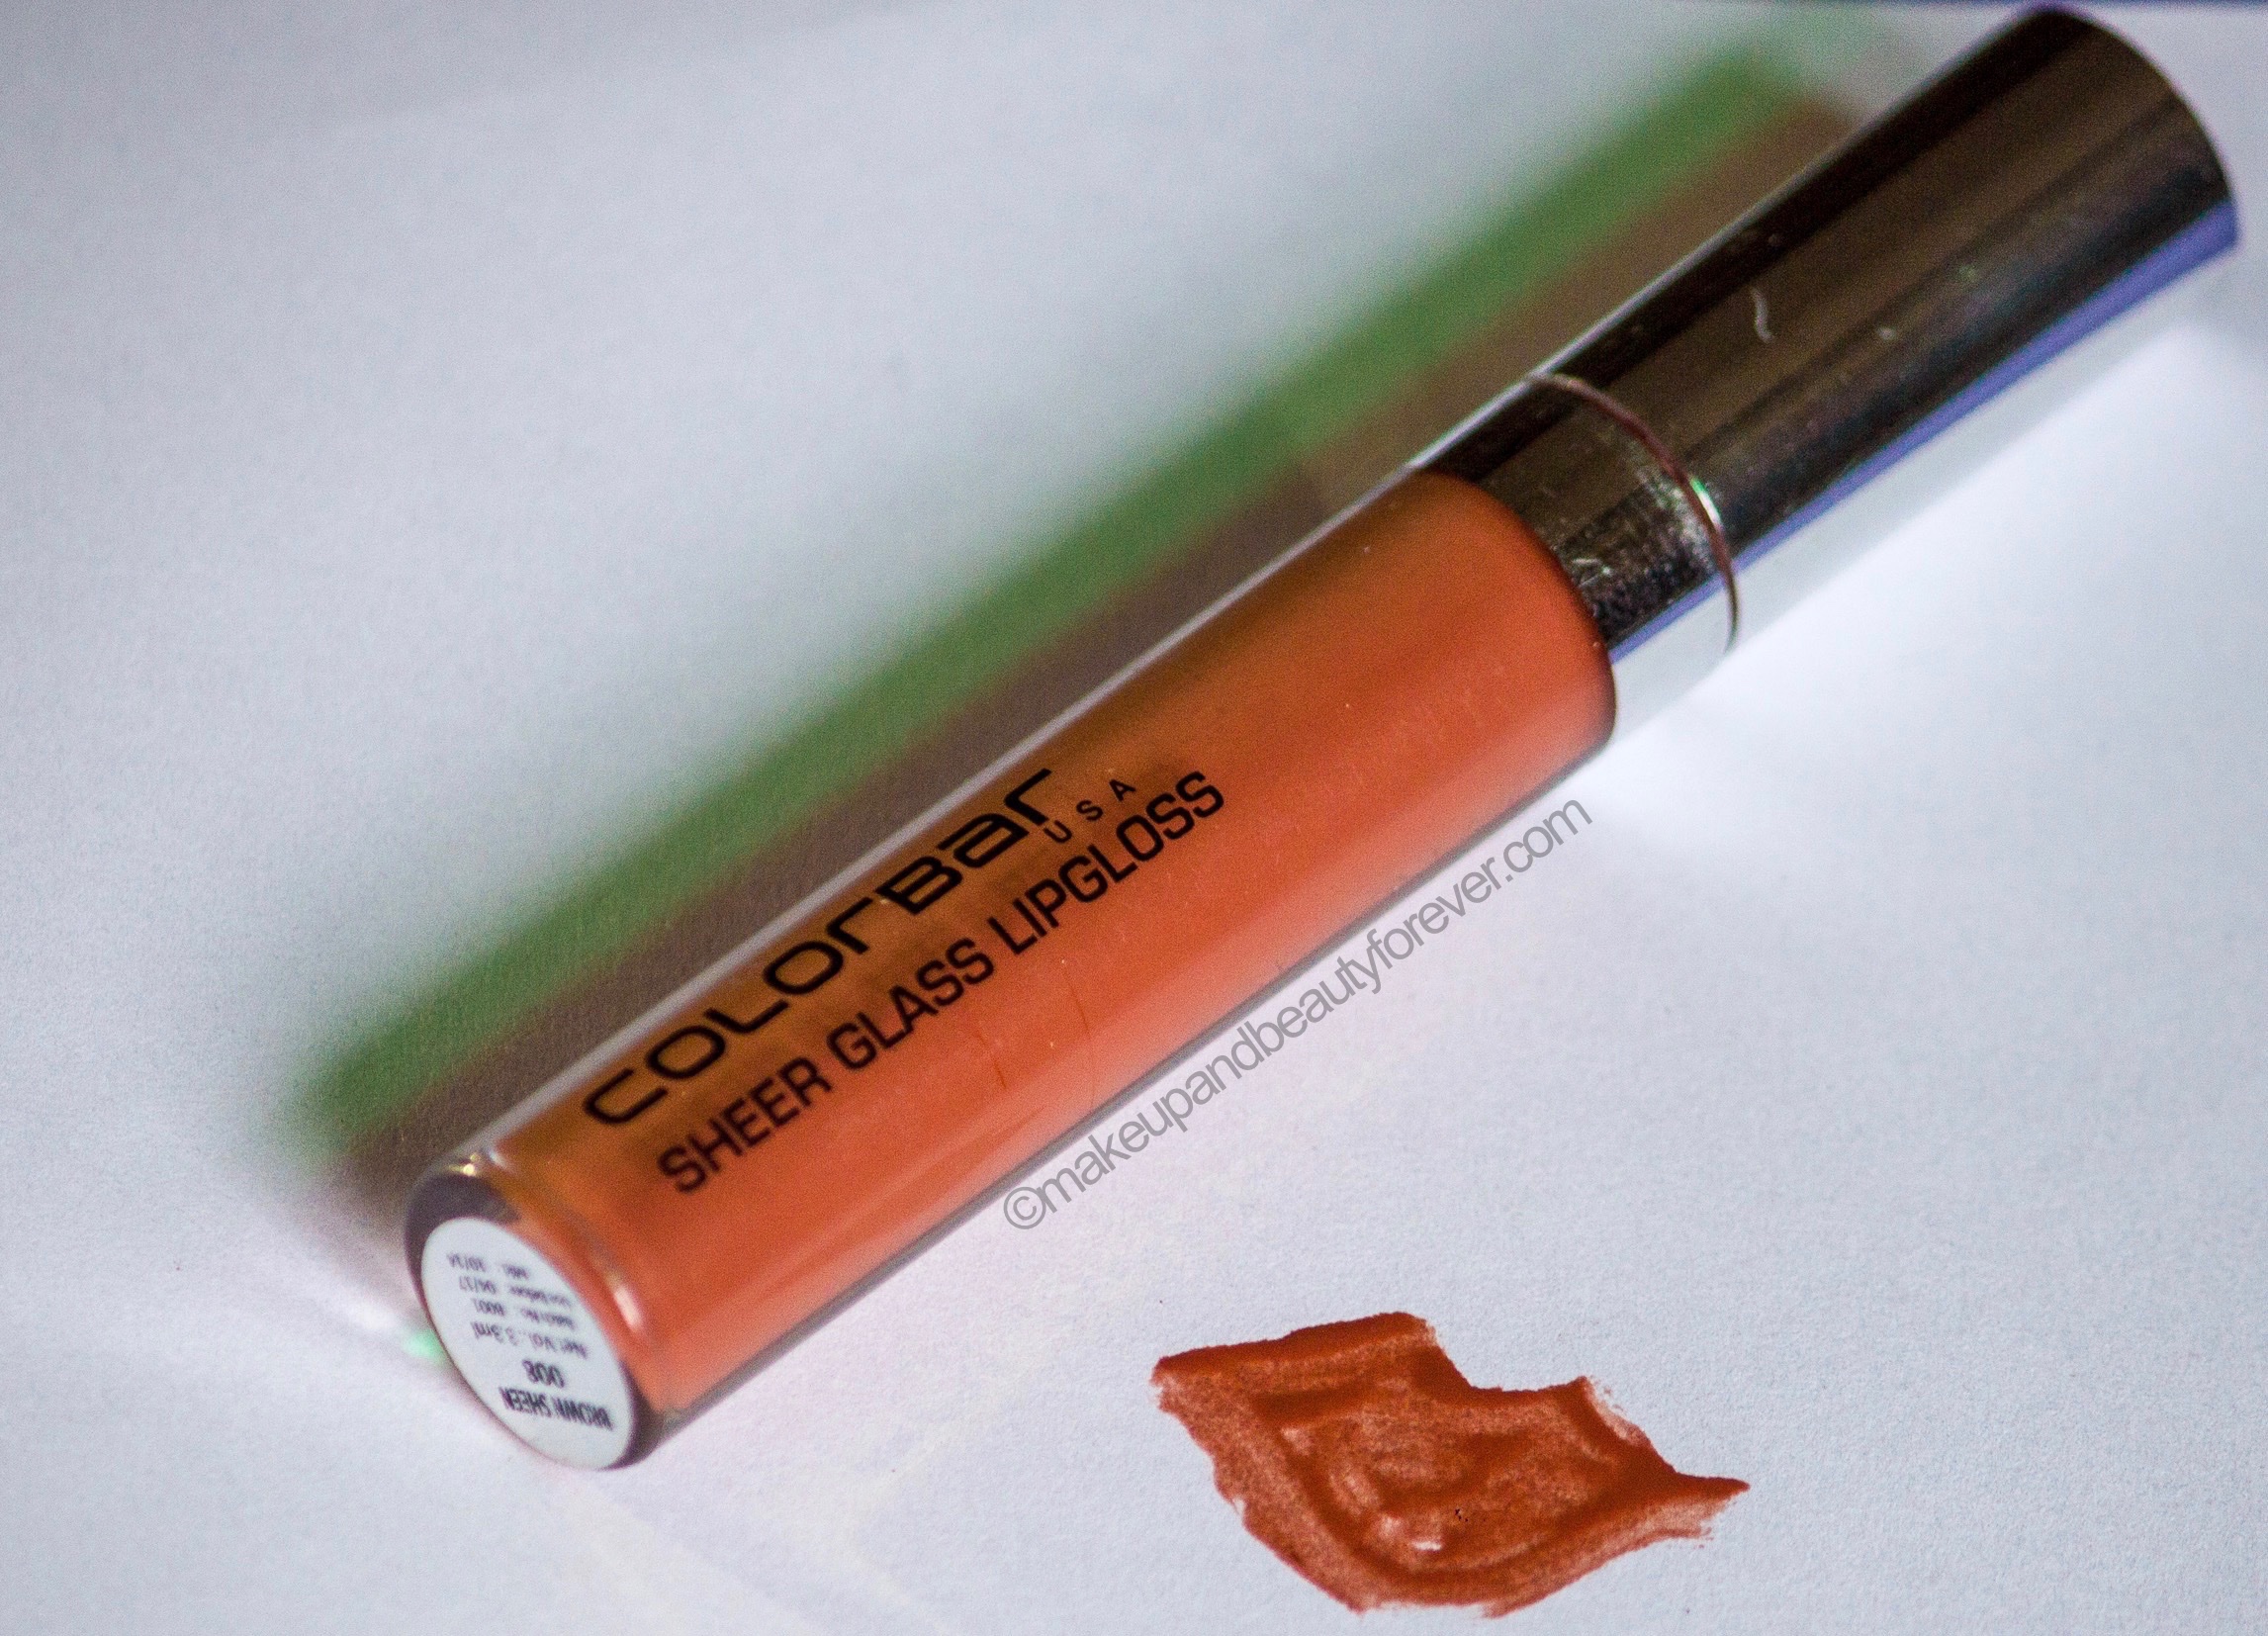 Colorbar Sheer Glass Lipgloss Brown Sheen Review LOTD beauty blog